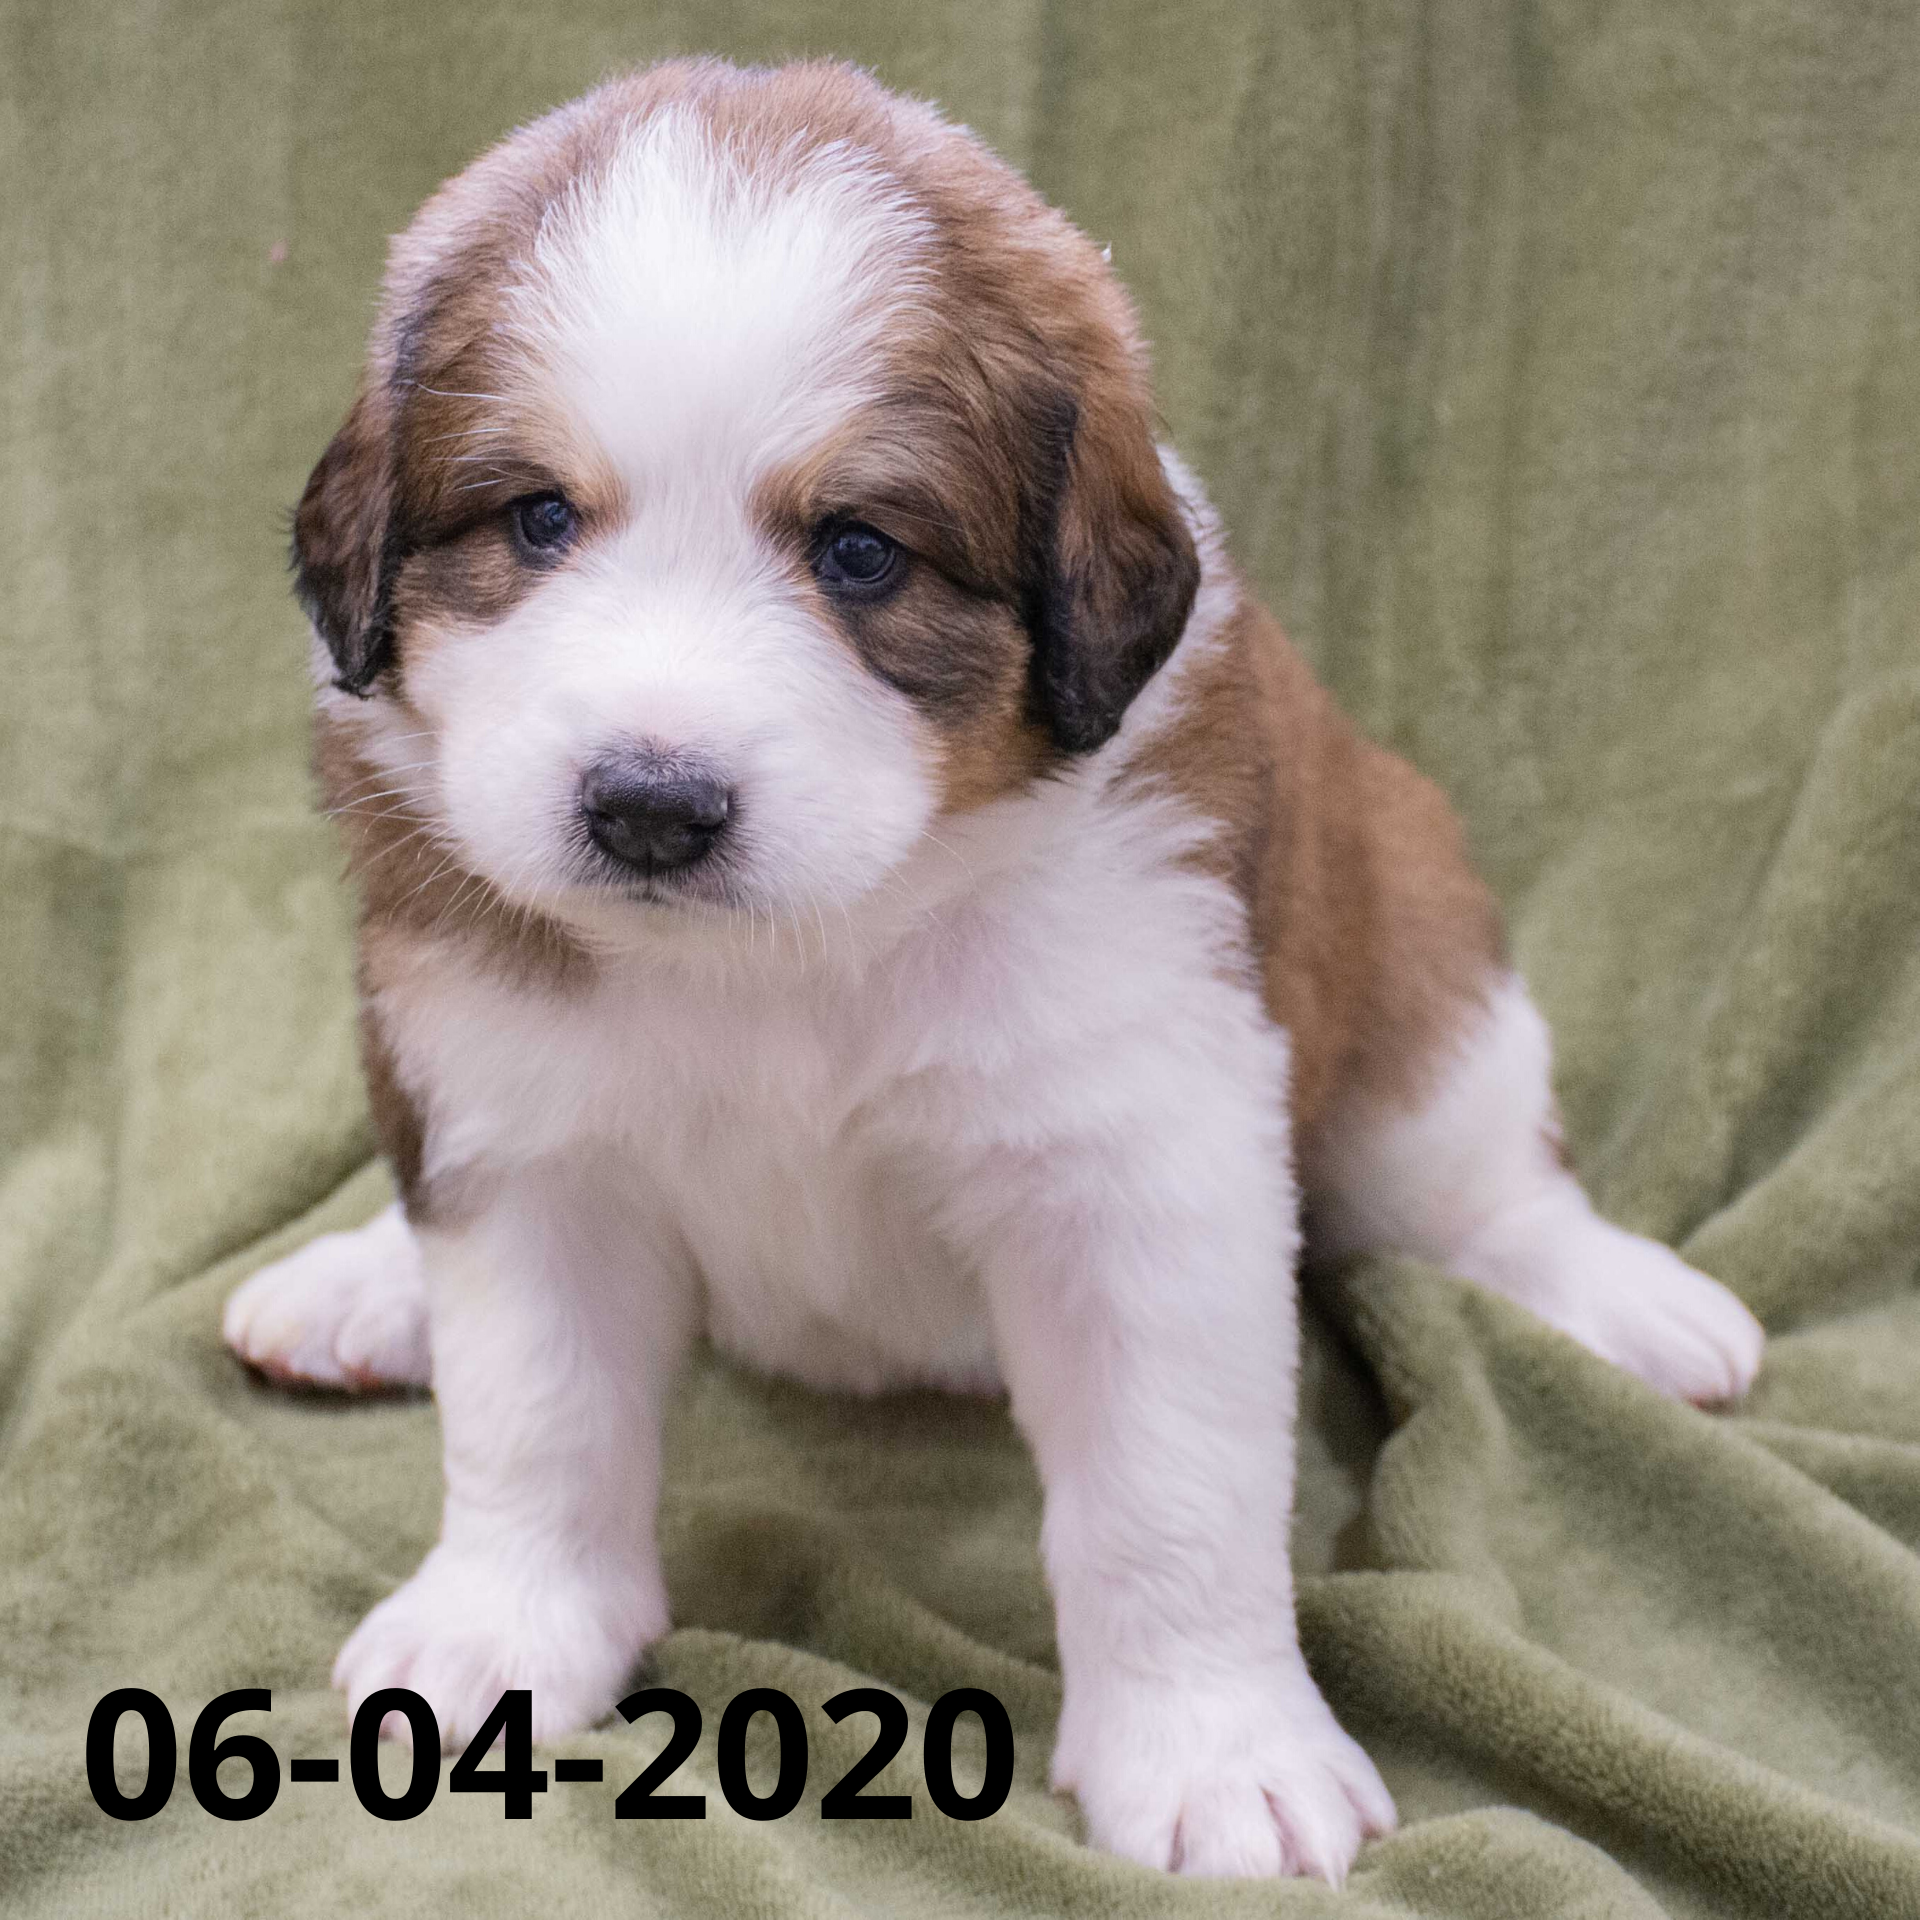 Joey (Sold) Male Great Bernese Puppy